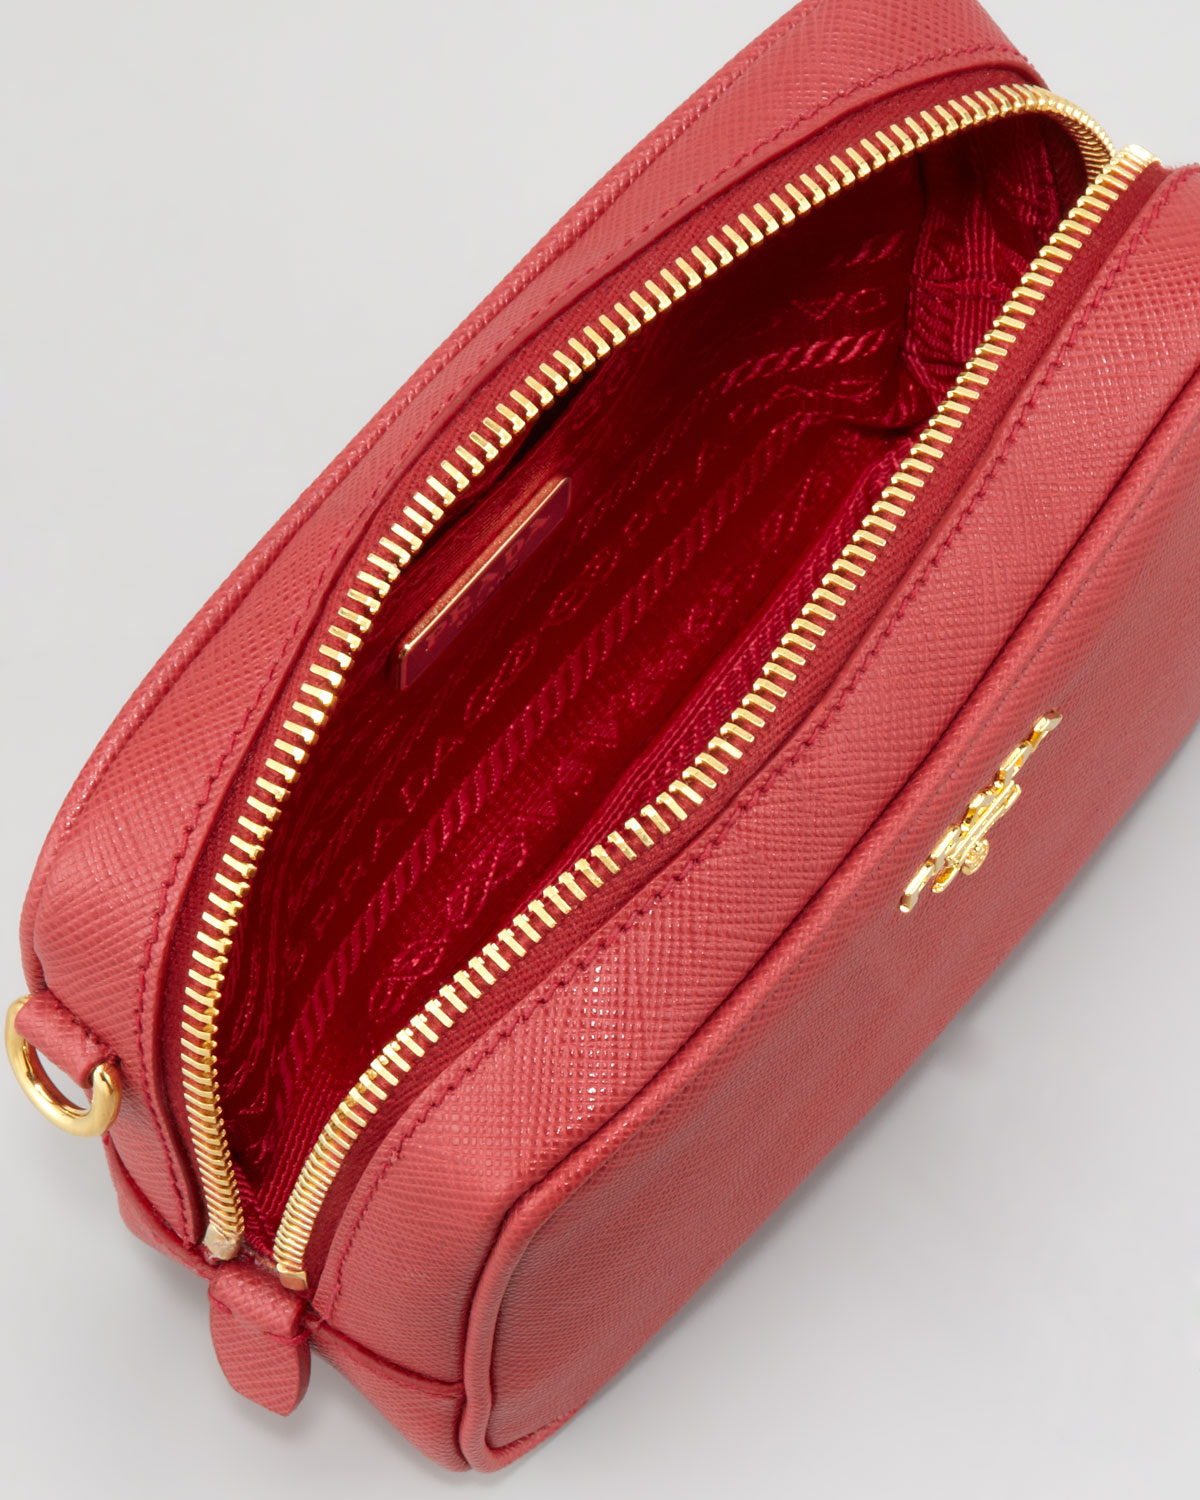 Prada Leather Saffiano Mini Zip Crossbody Bag in Red - Lyst